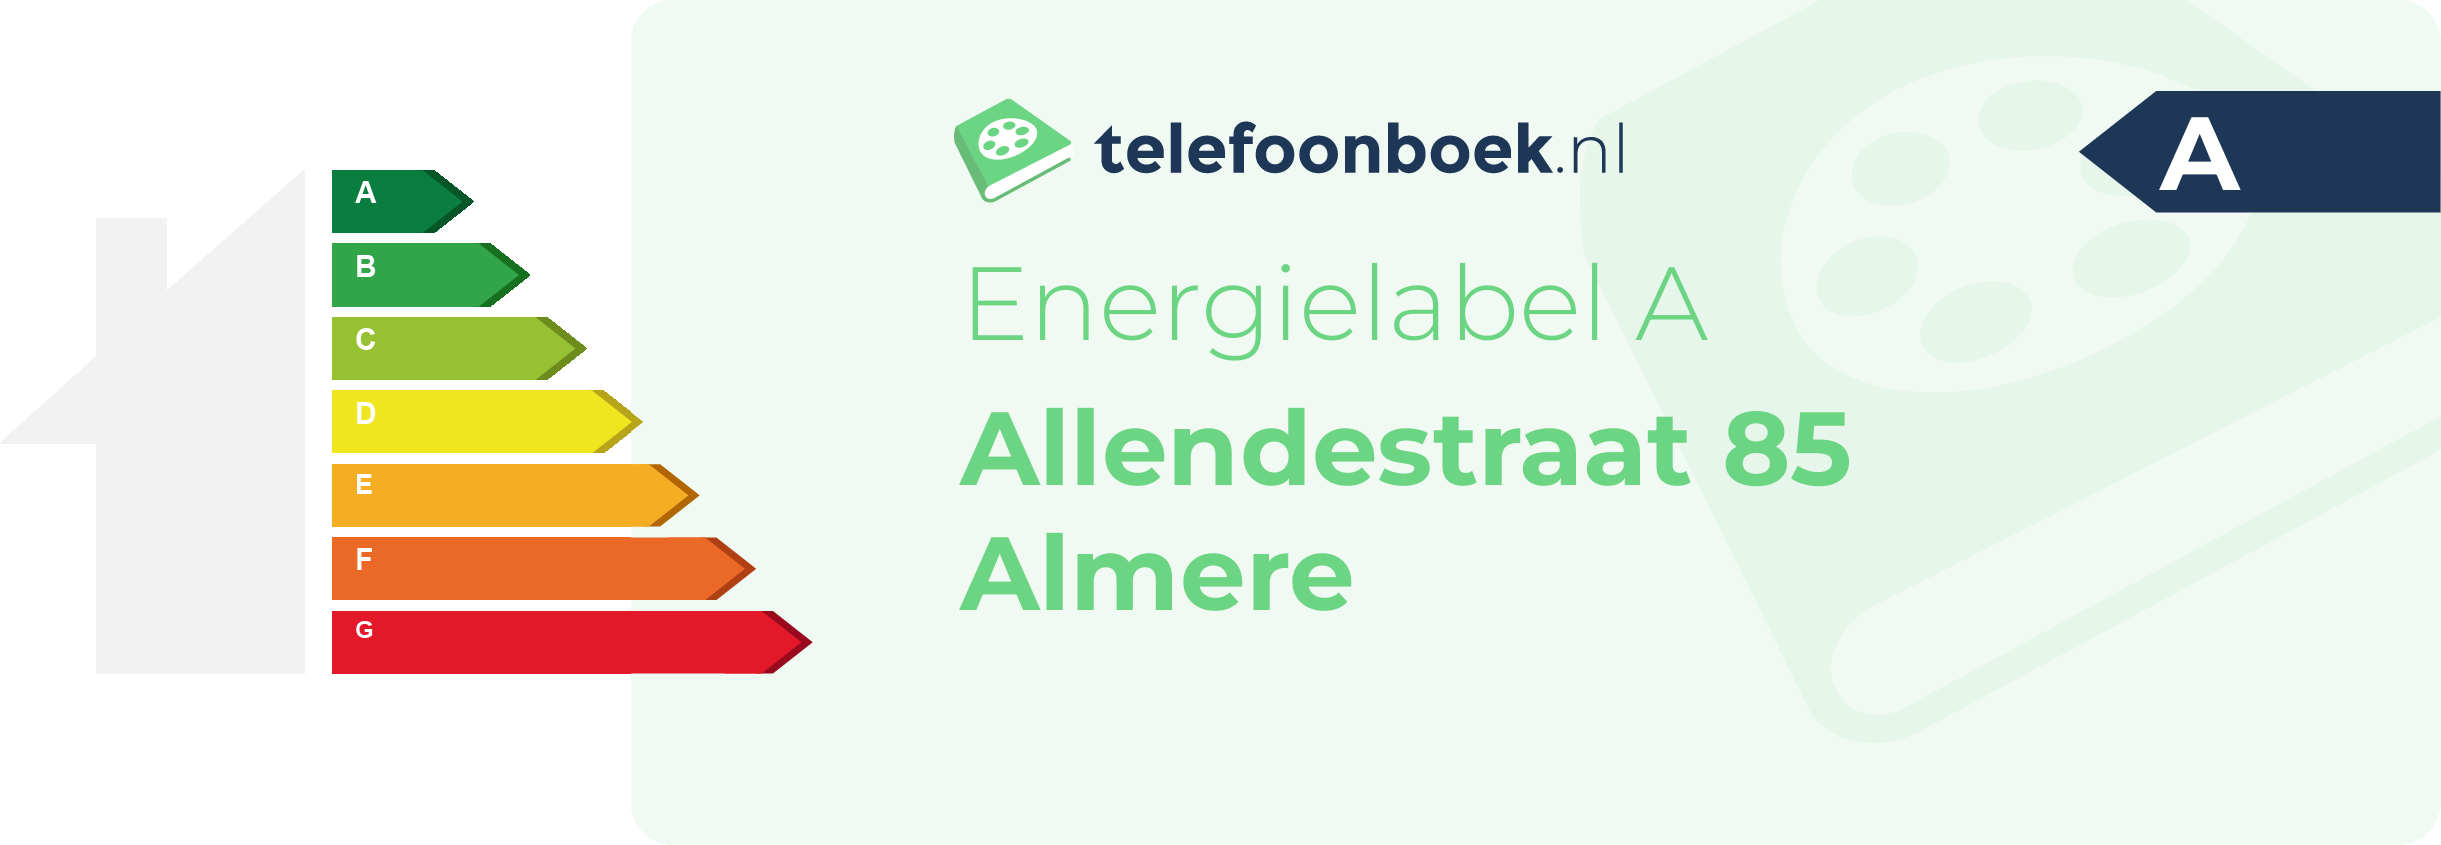 Energielabel Allendestraat 85 Almere